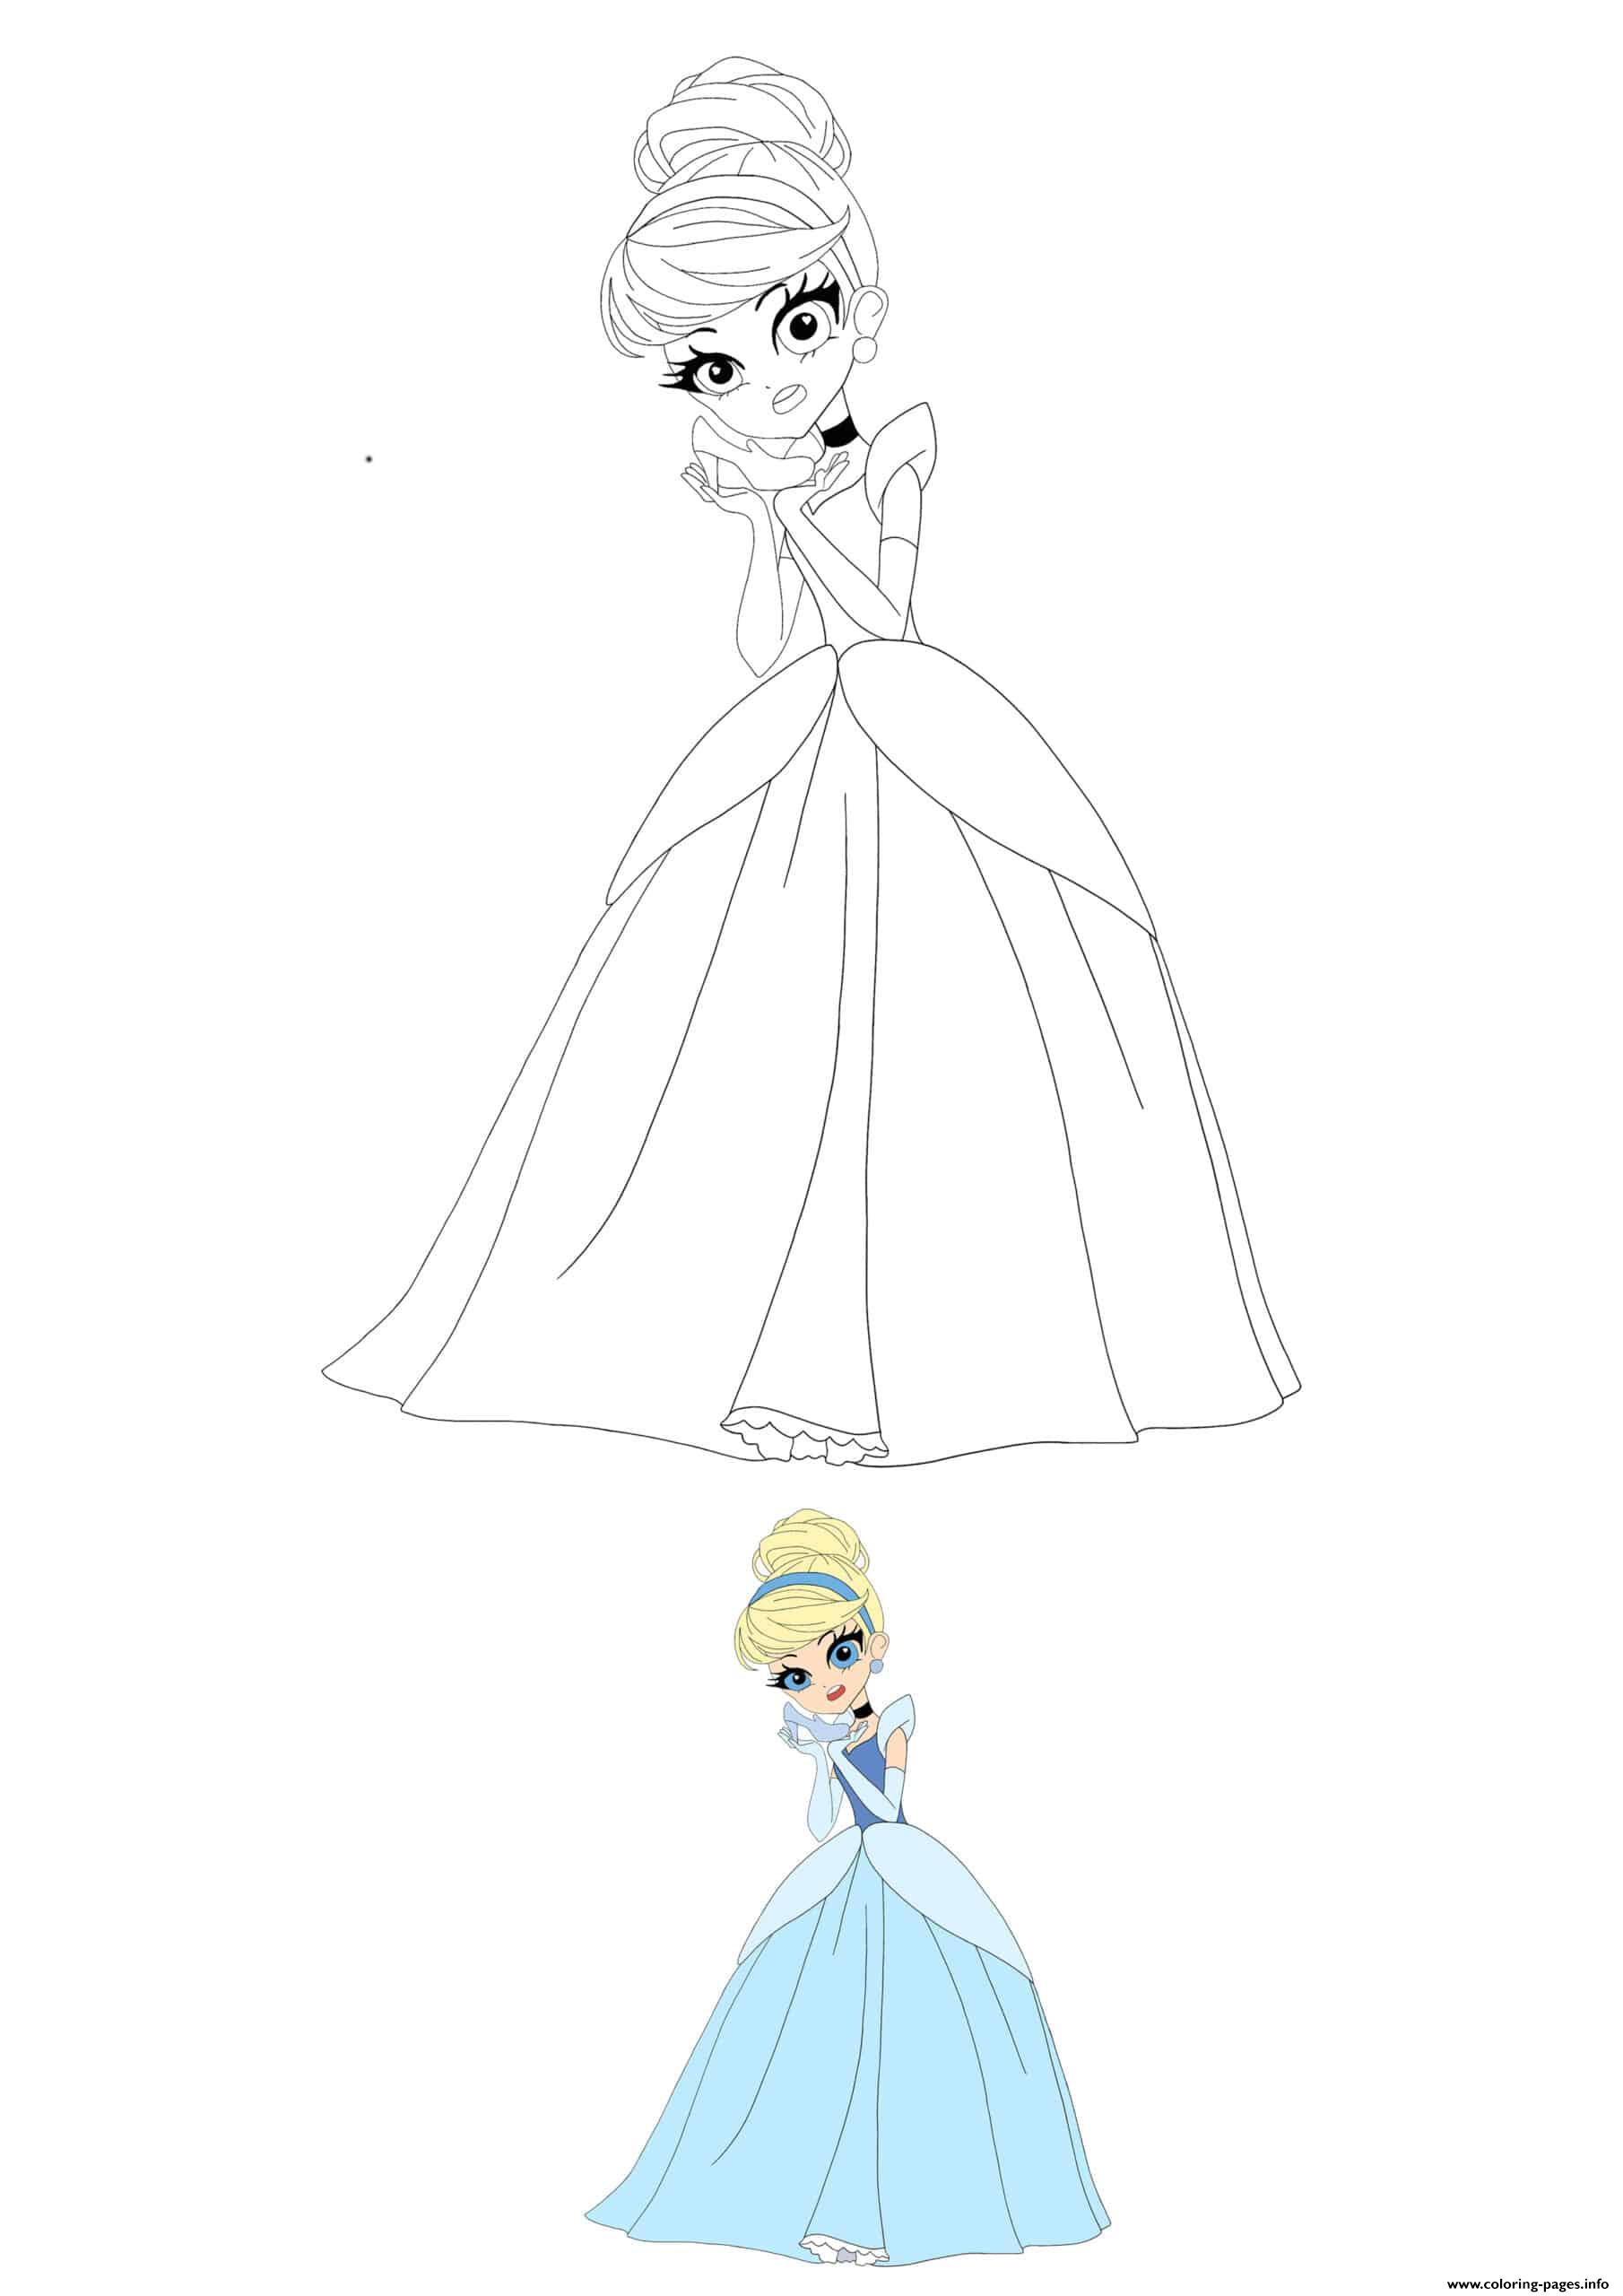 Anime Disney Princess Cinderella coloring